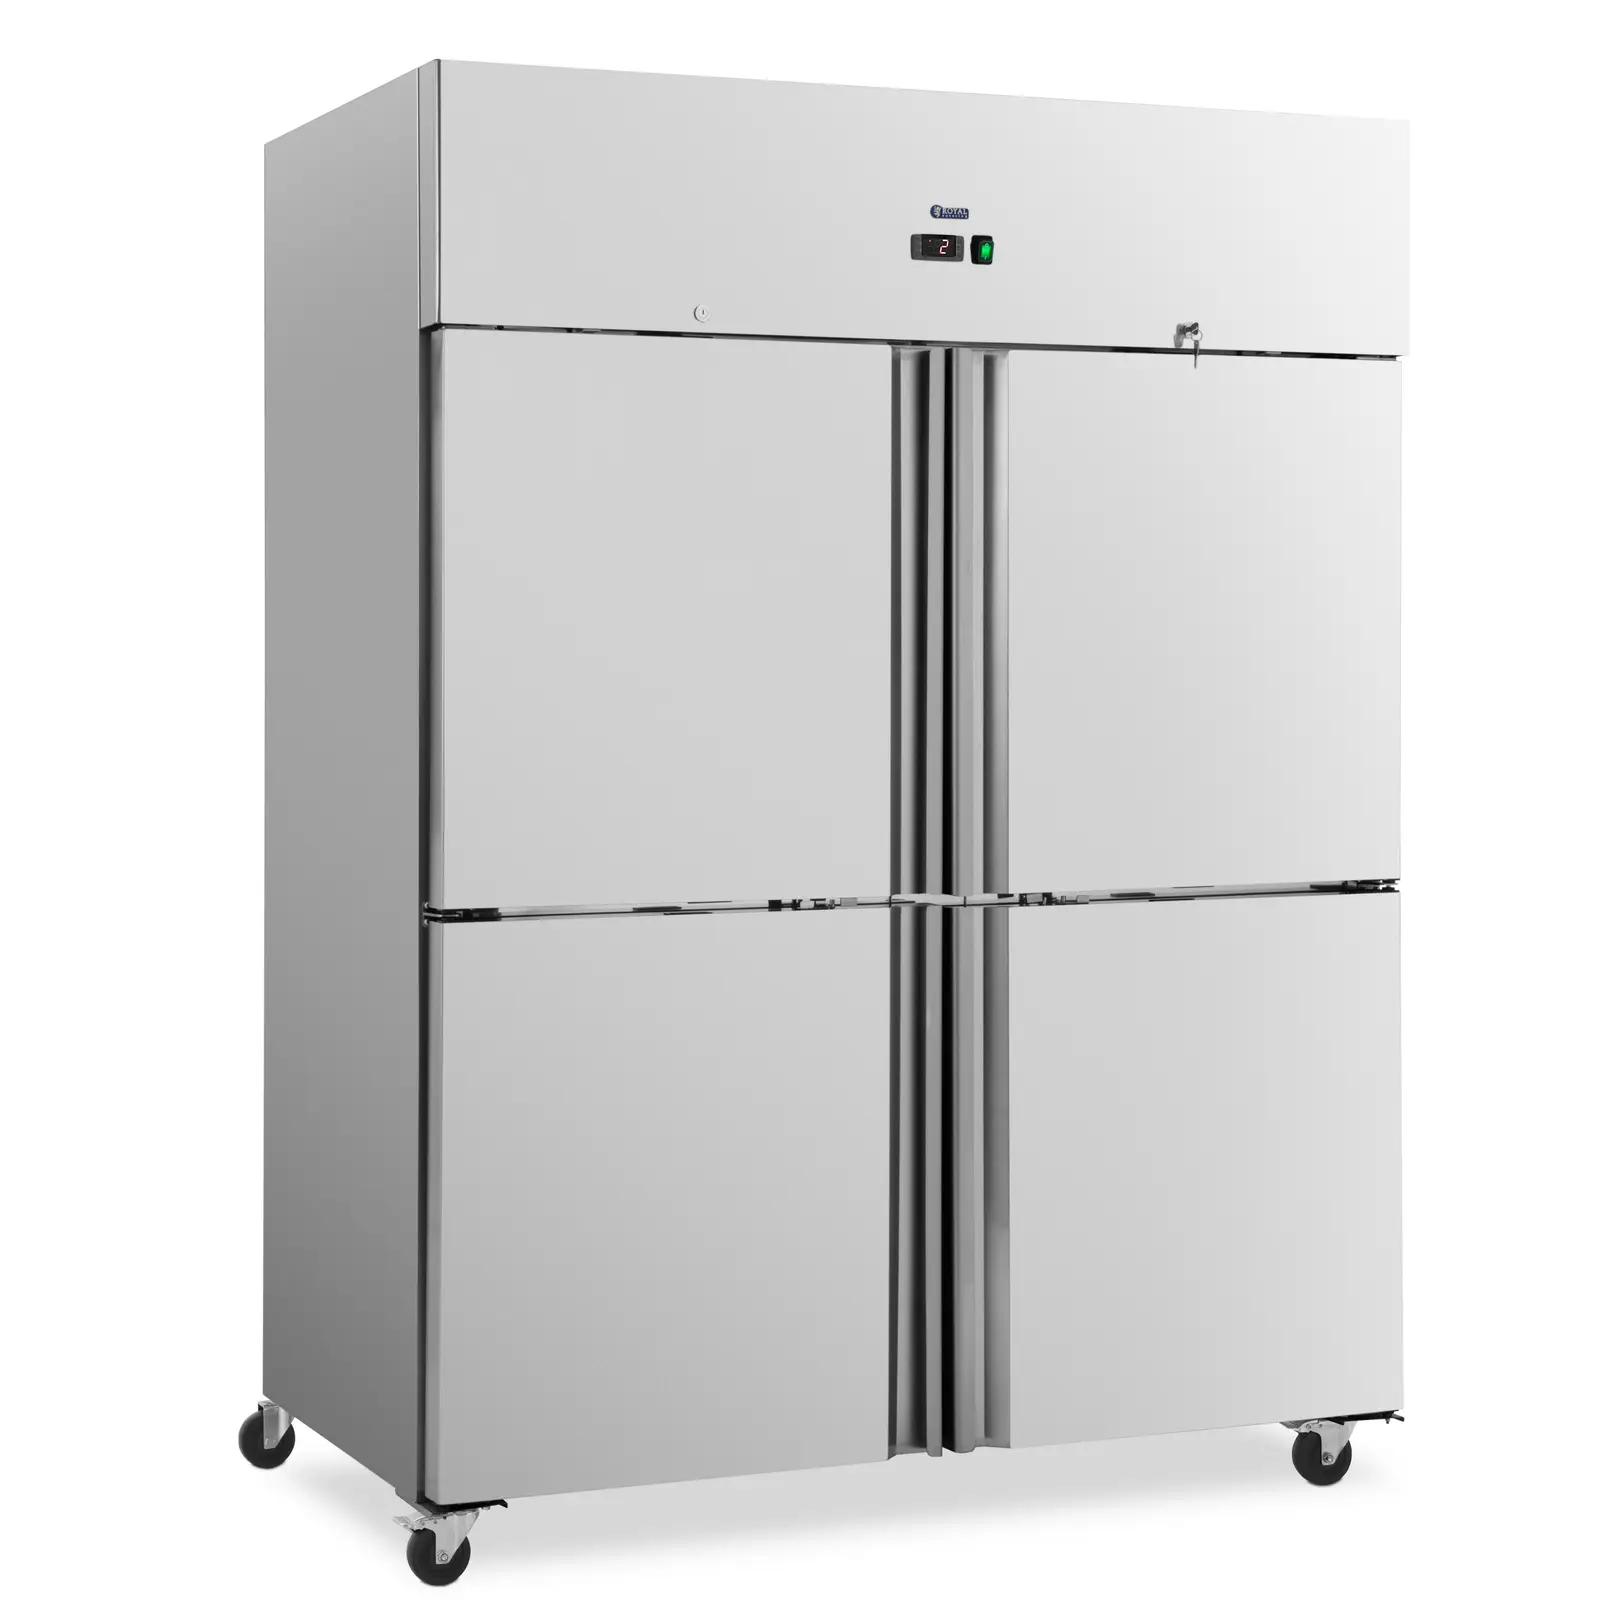 Gastro-Kühlschrank - 1001 l - Edelstahl - 4 Türen - 4 Rollen - abschließbar - Royal Catering